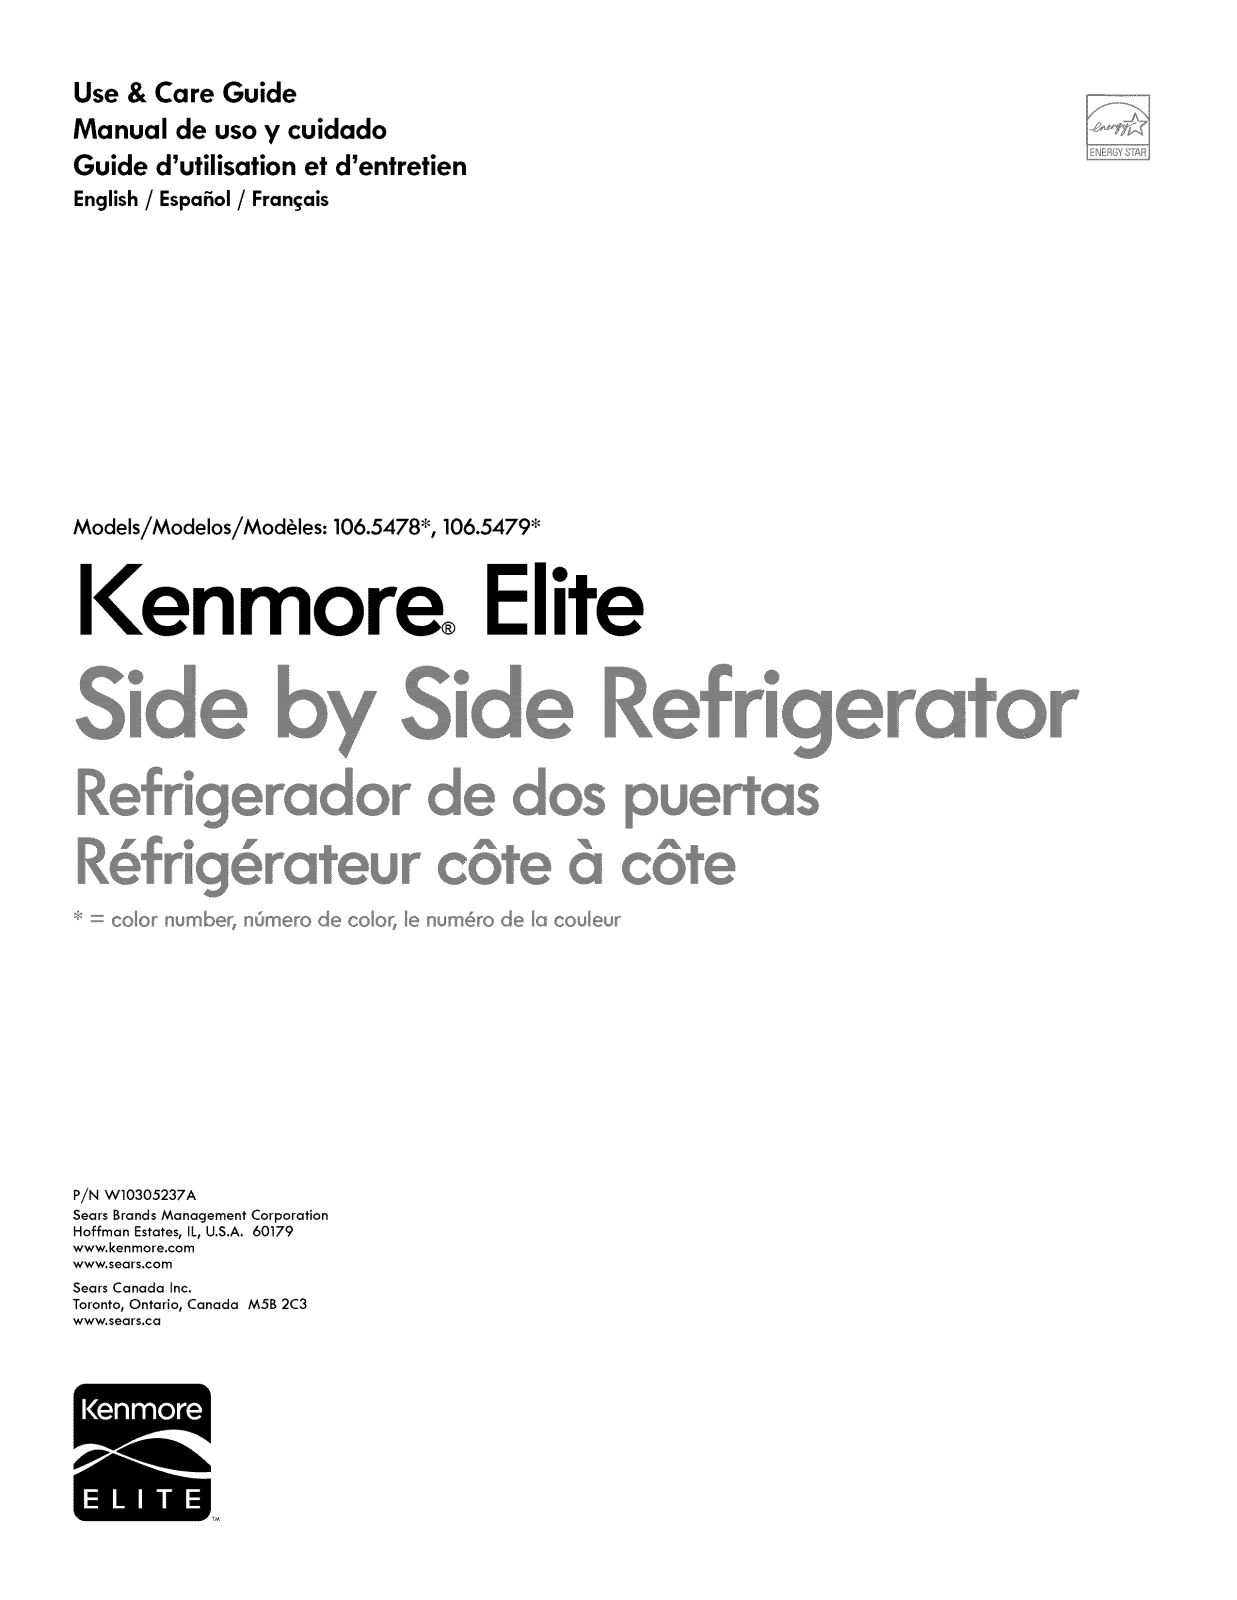 Kenmore Elite 10654782804, 10654783804, 10654784804, 10654786804, 10654789804 Owner’s Manual